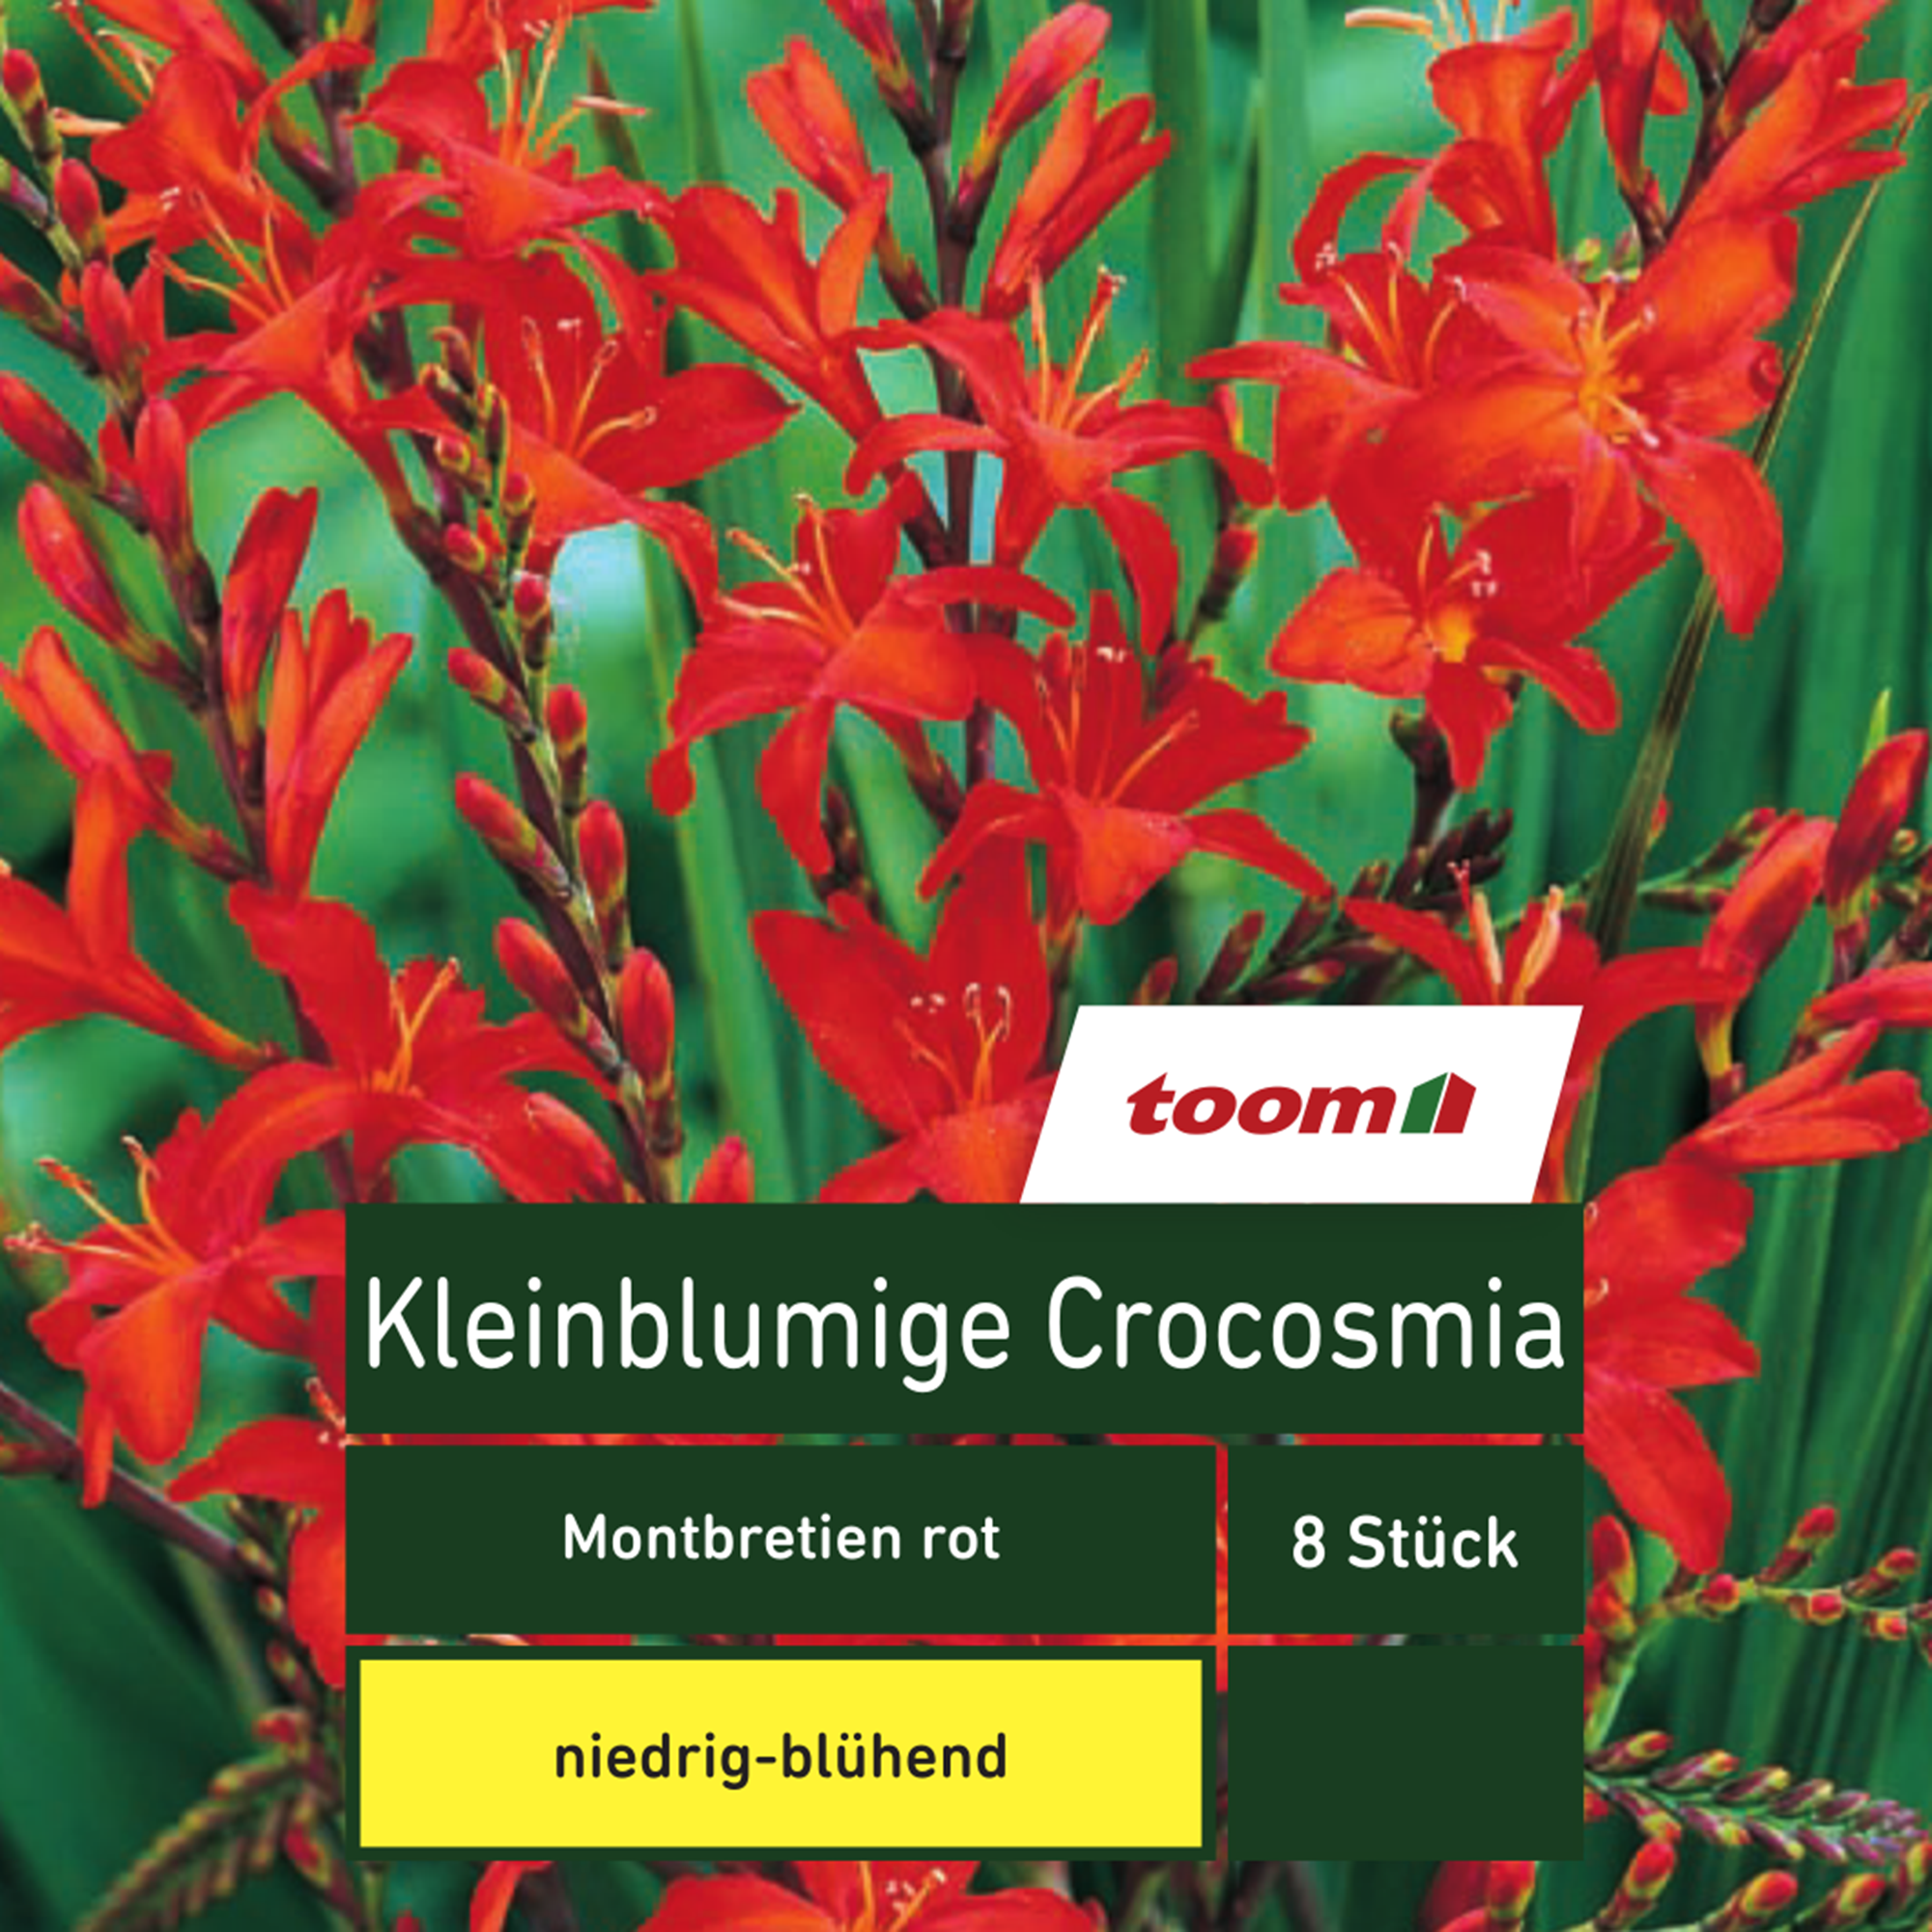 Kleinblumige Crocosmia 'Montbretien', 8 Stück, rot + product picture